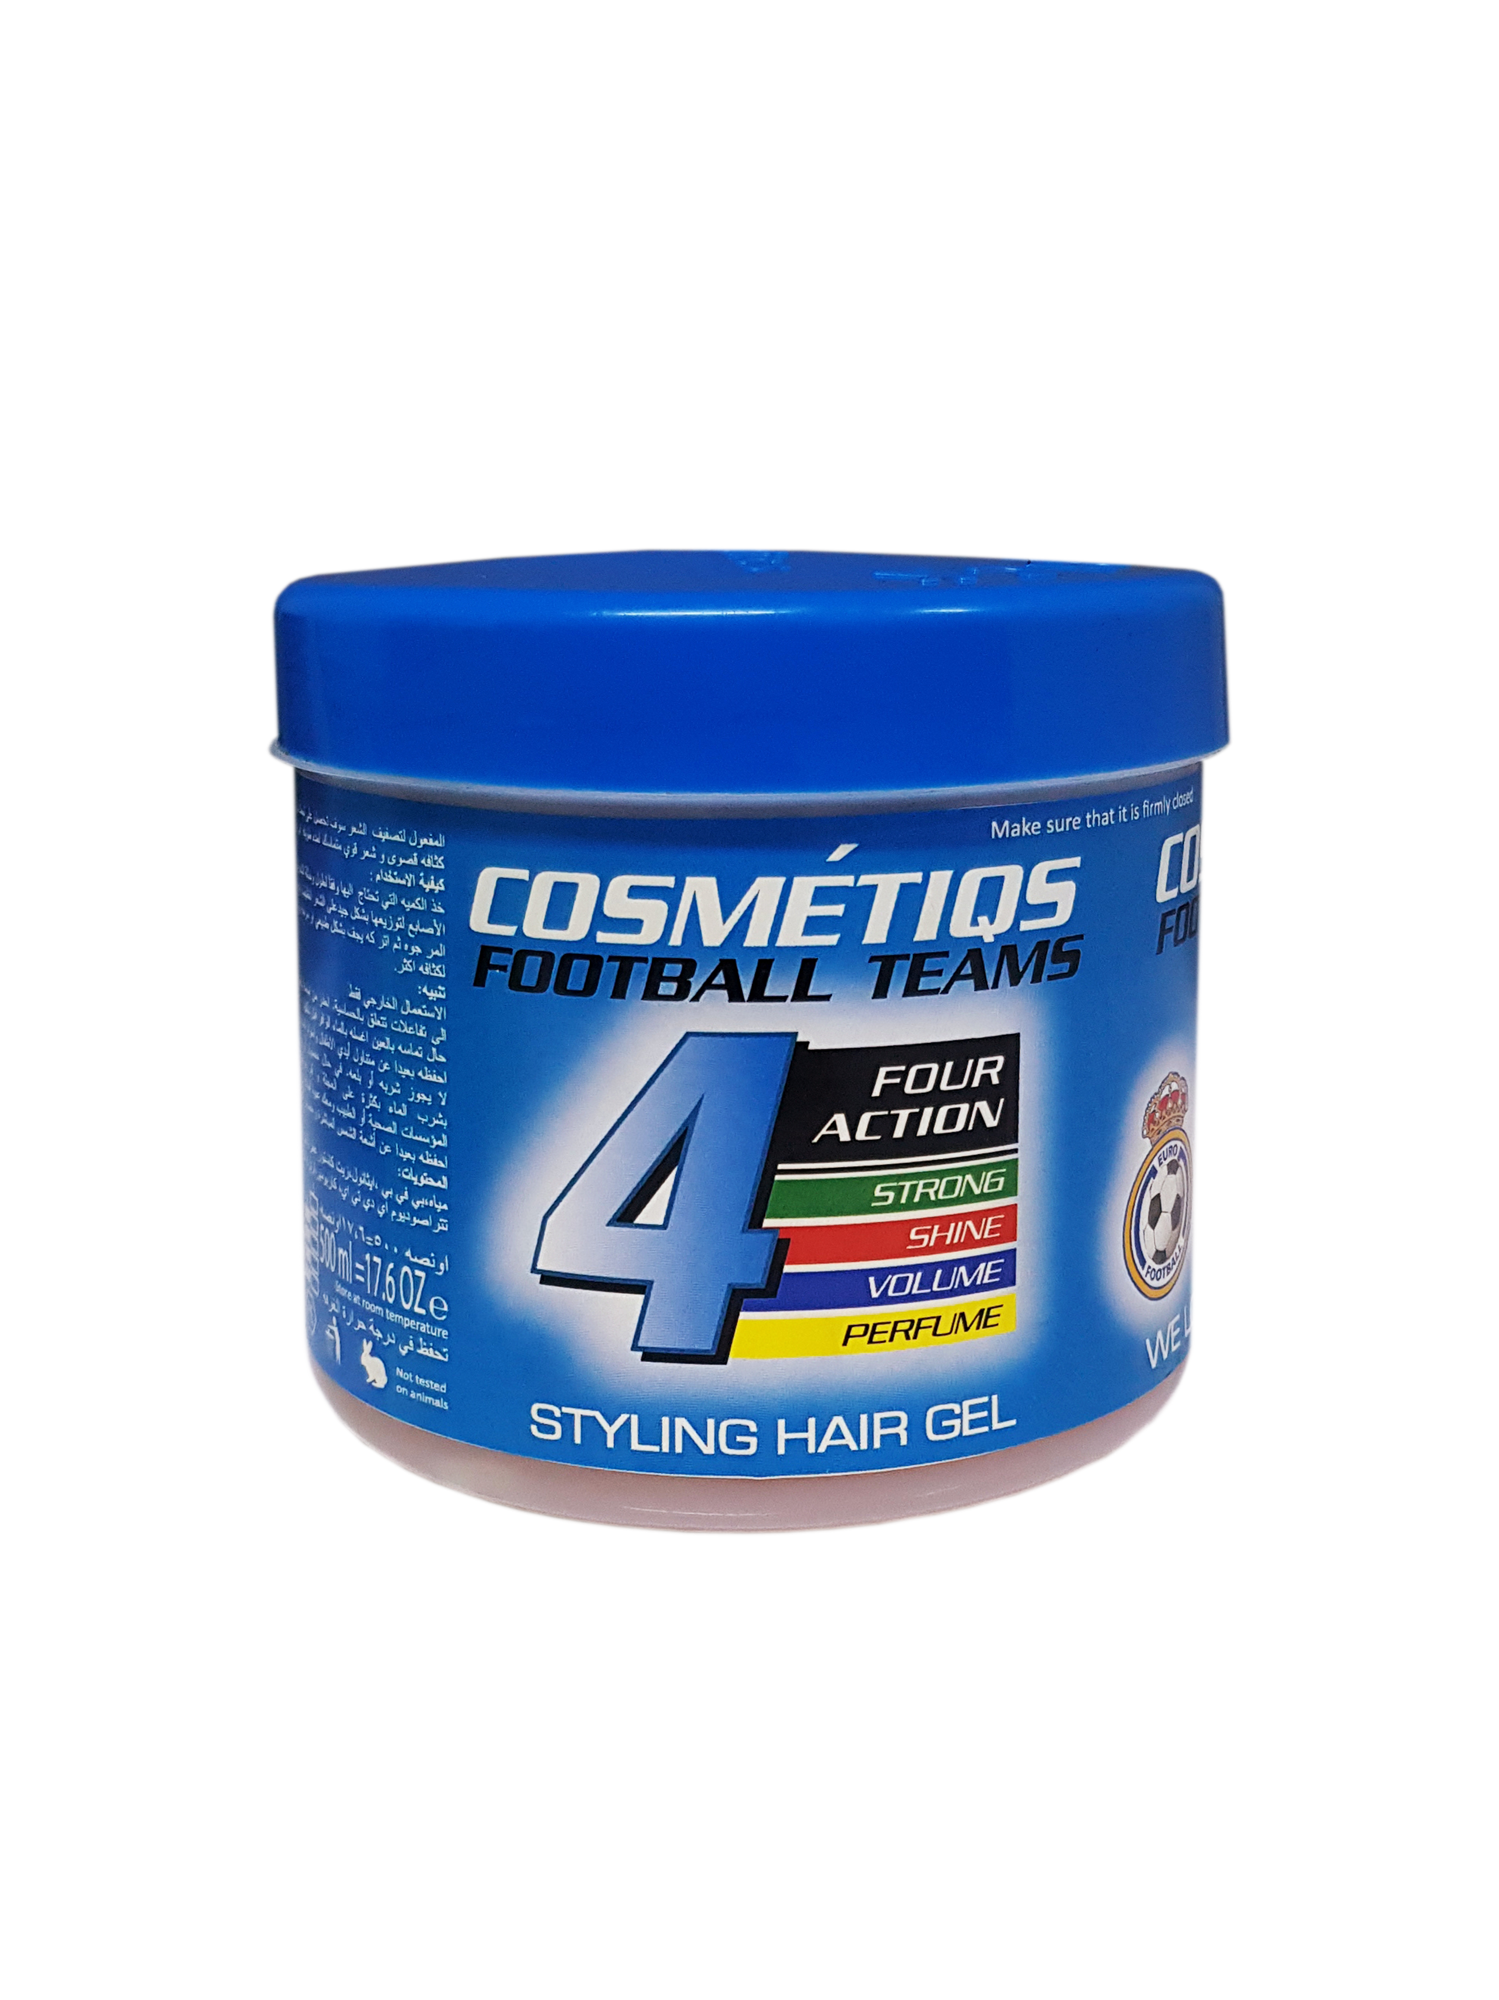 Cosmetiqs Styling Hair Gel